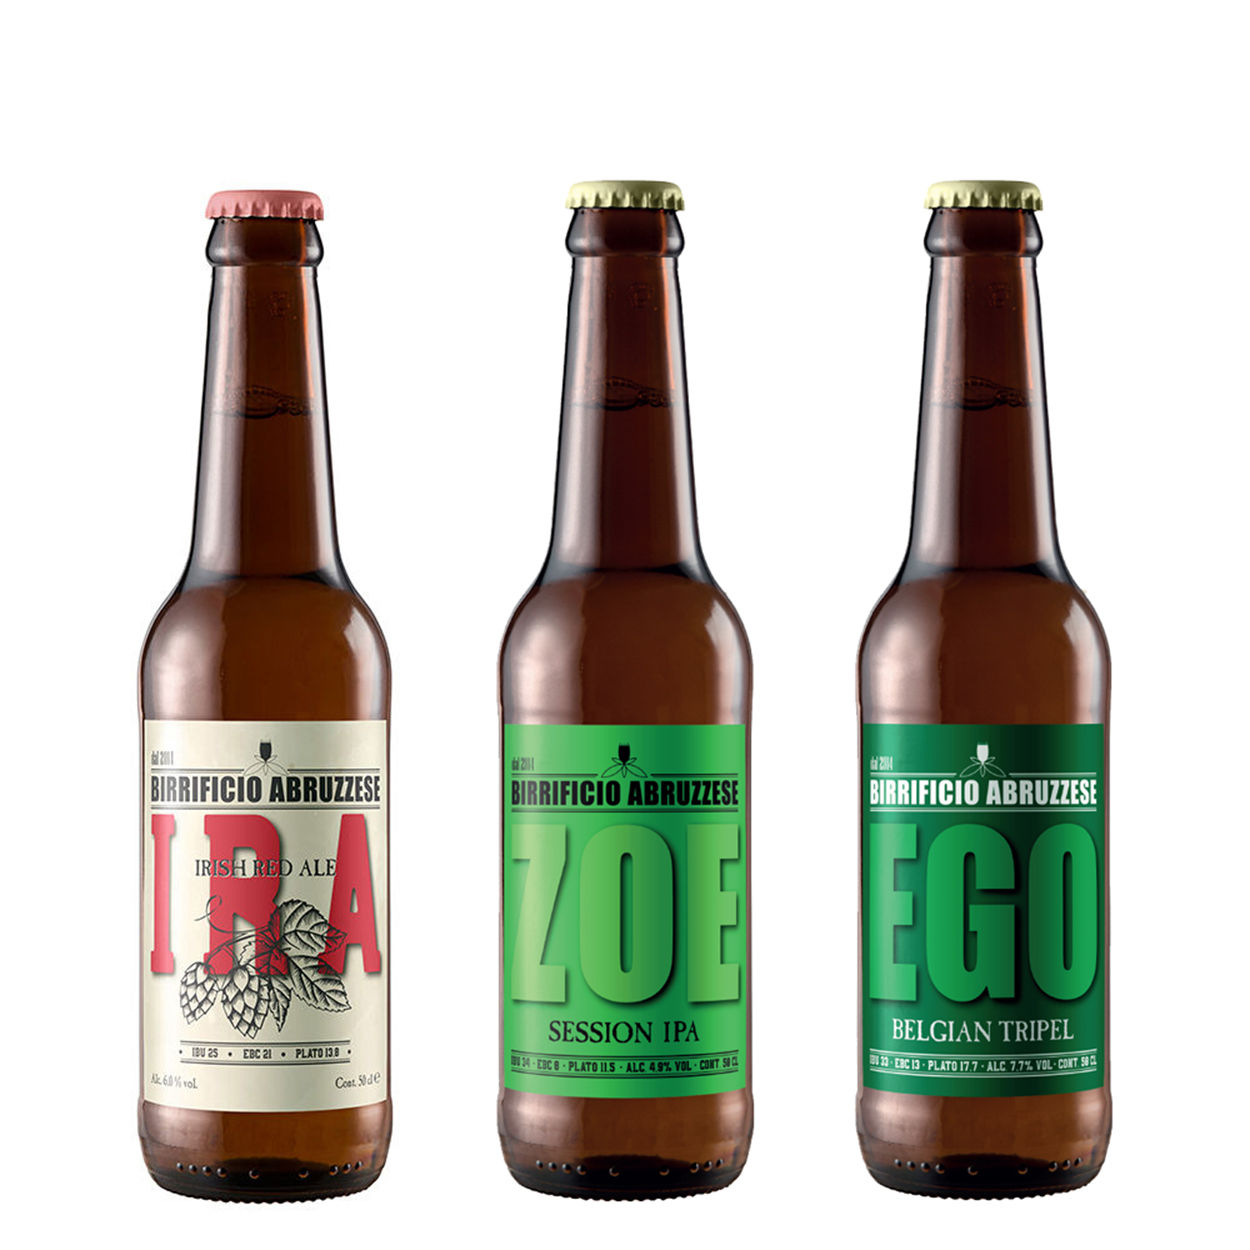 6 bottiglie miste 50 cl: 2 IRA Irish Red Ale - 2 ZOE Session IPA - 2 EGO Belgian Tripel